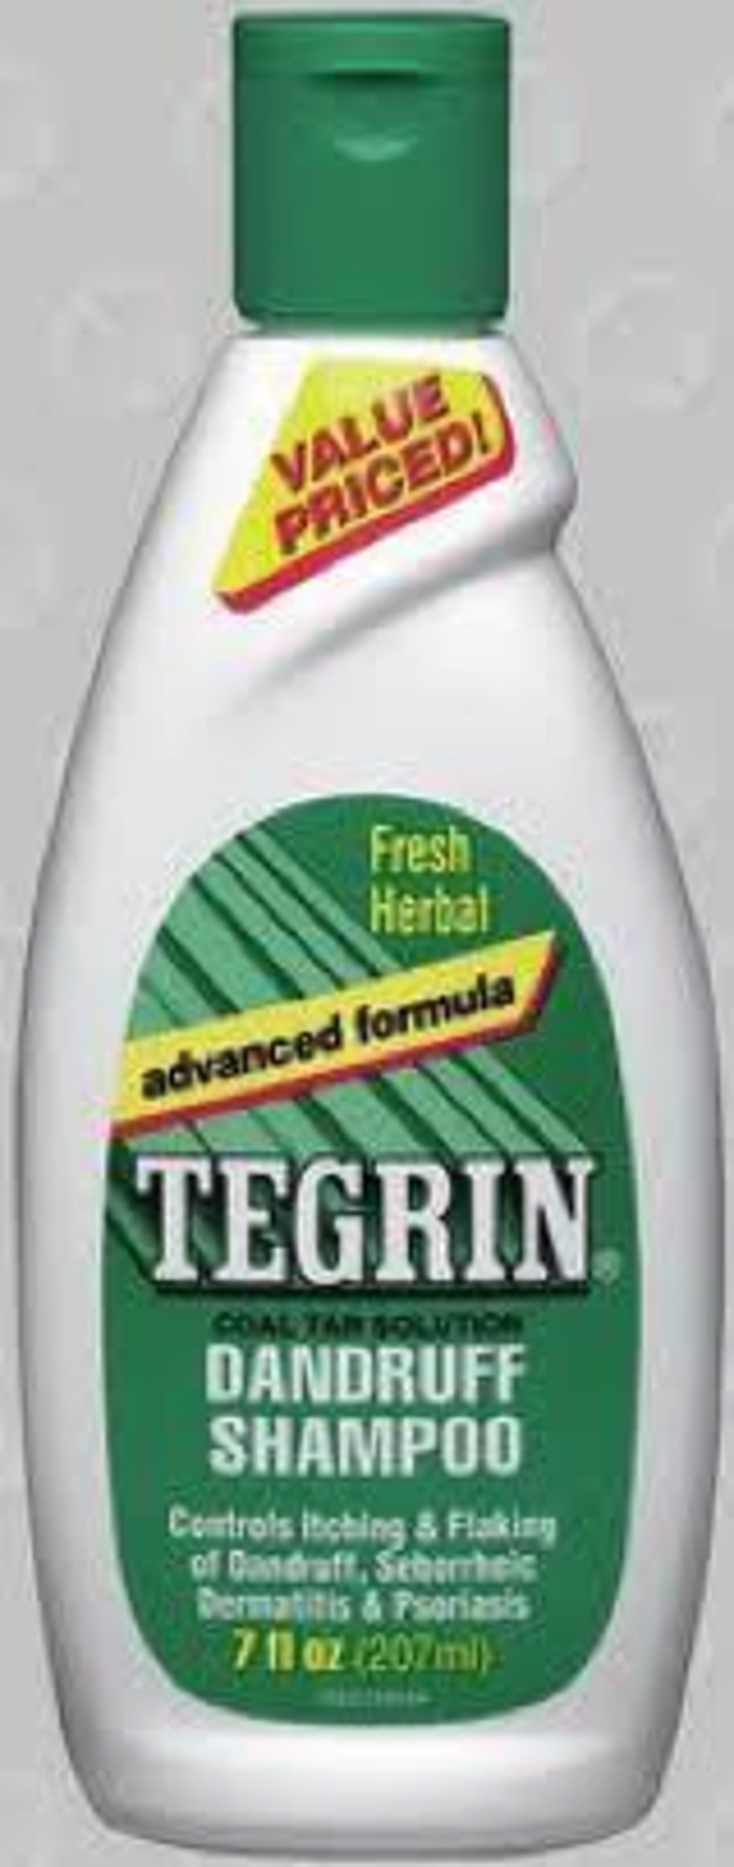 RJM to Revive Tegrin Brand